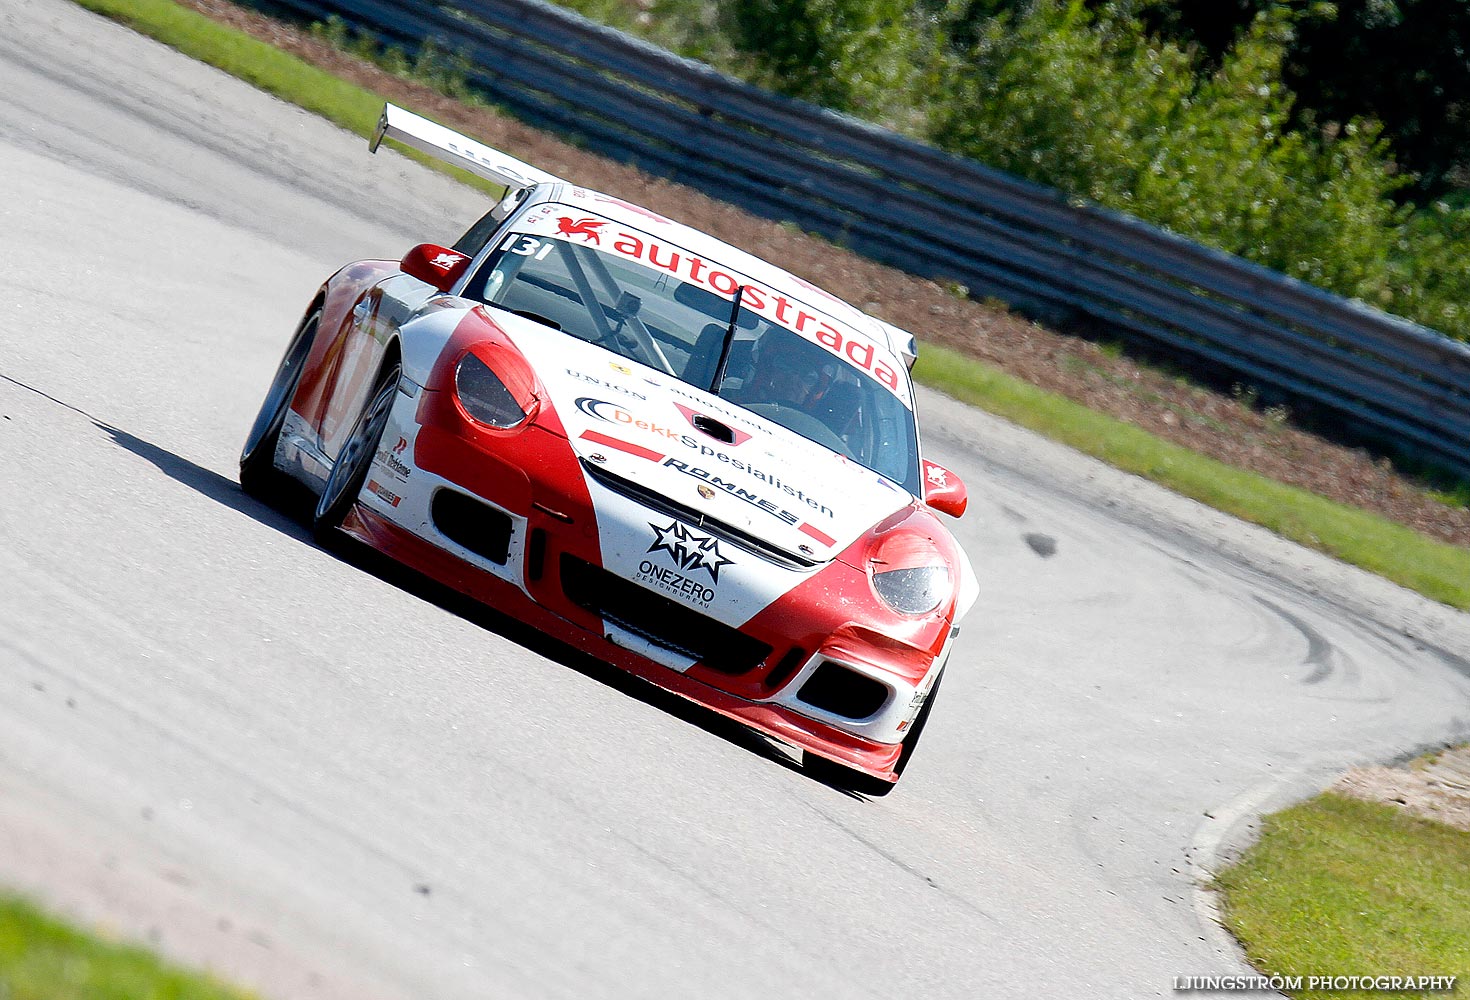 SSK Raceweek,mix,Kinnekulle Ring,Götene,Sverige,Motorsport,,2011,44515